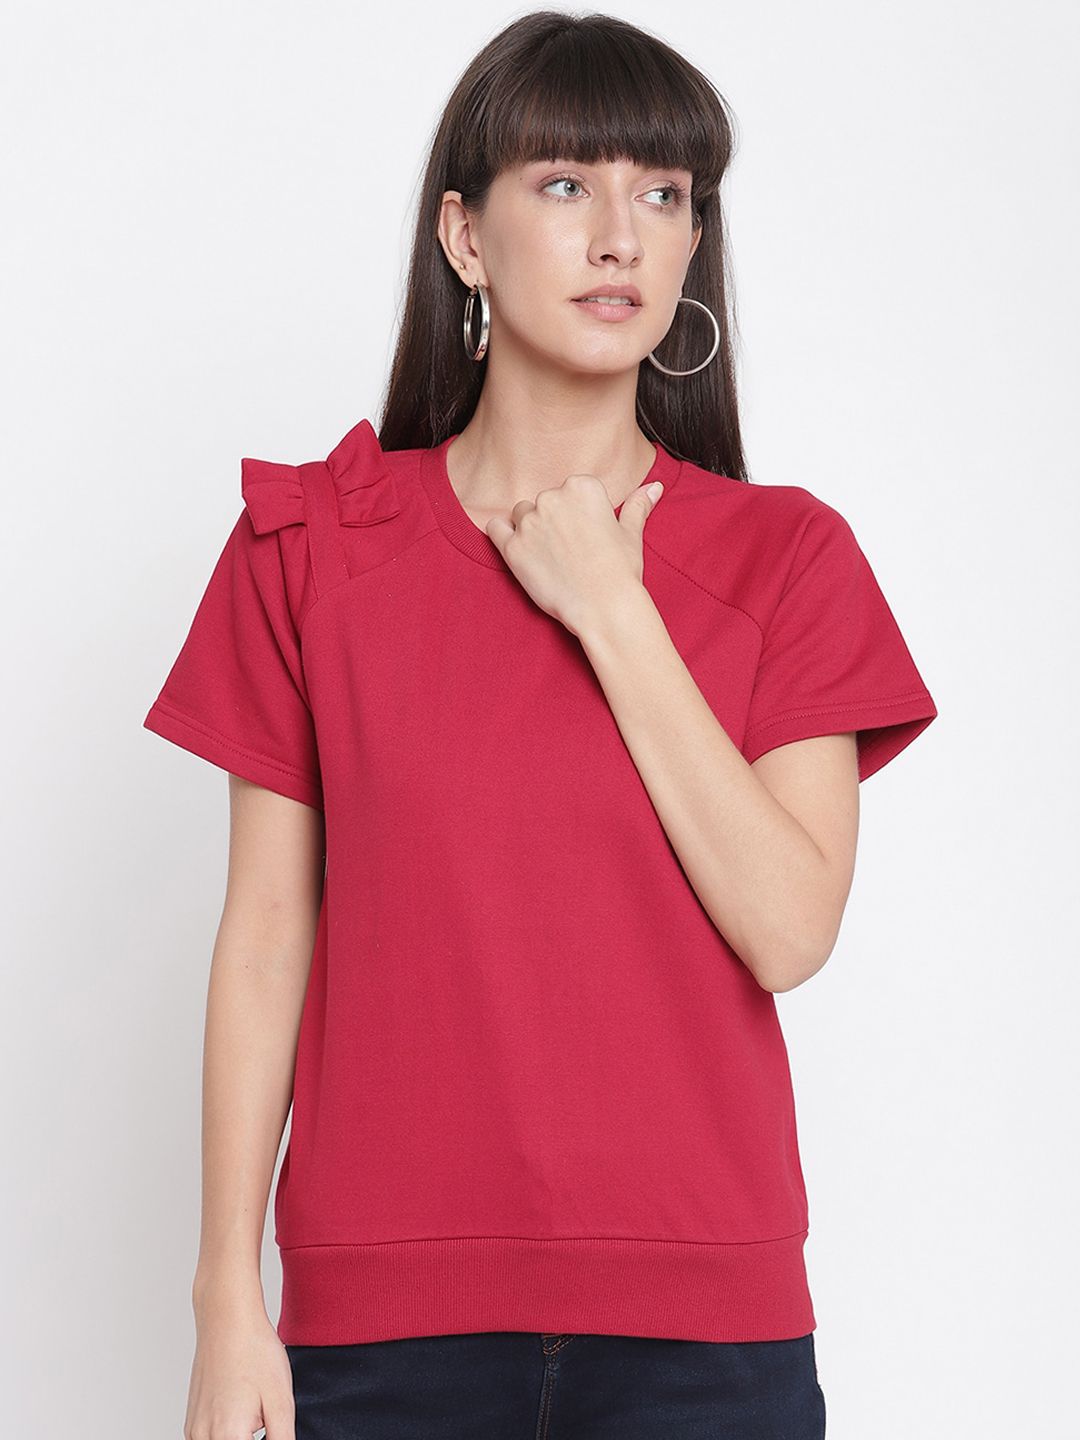 The Vanca Women Red Bow Style Sweatshirt Price in India